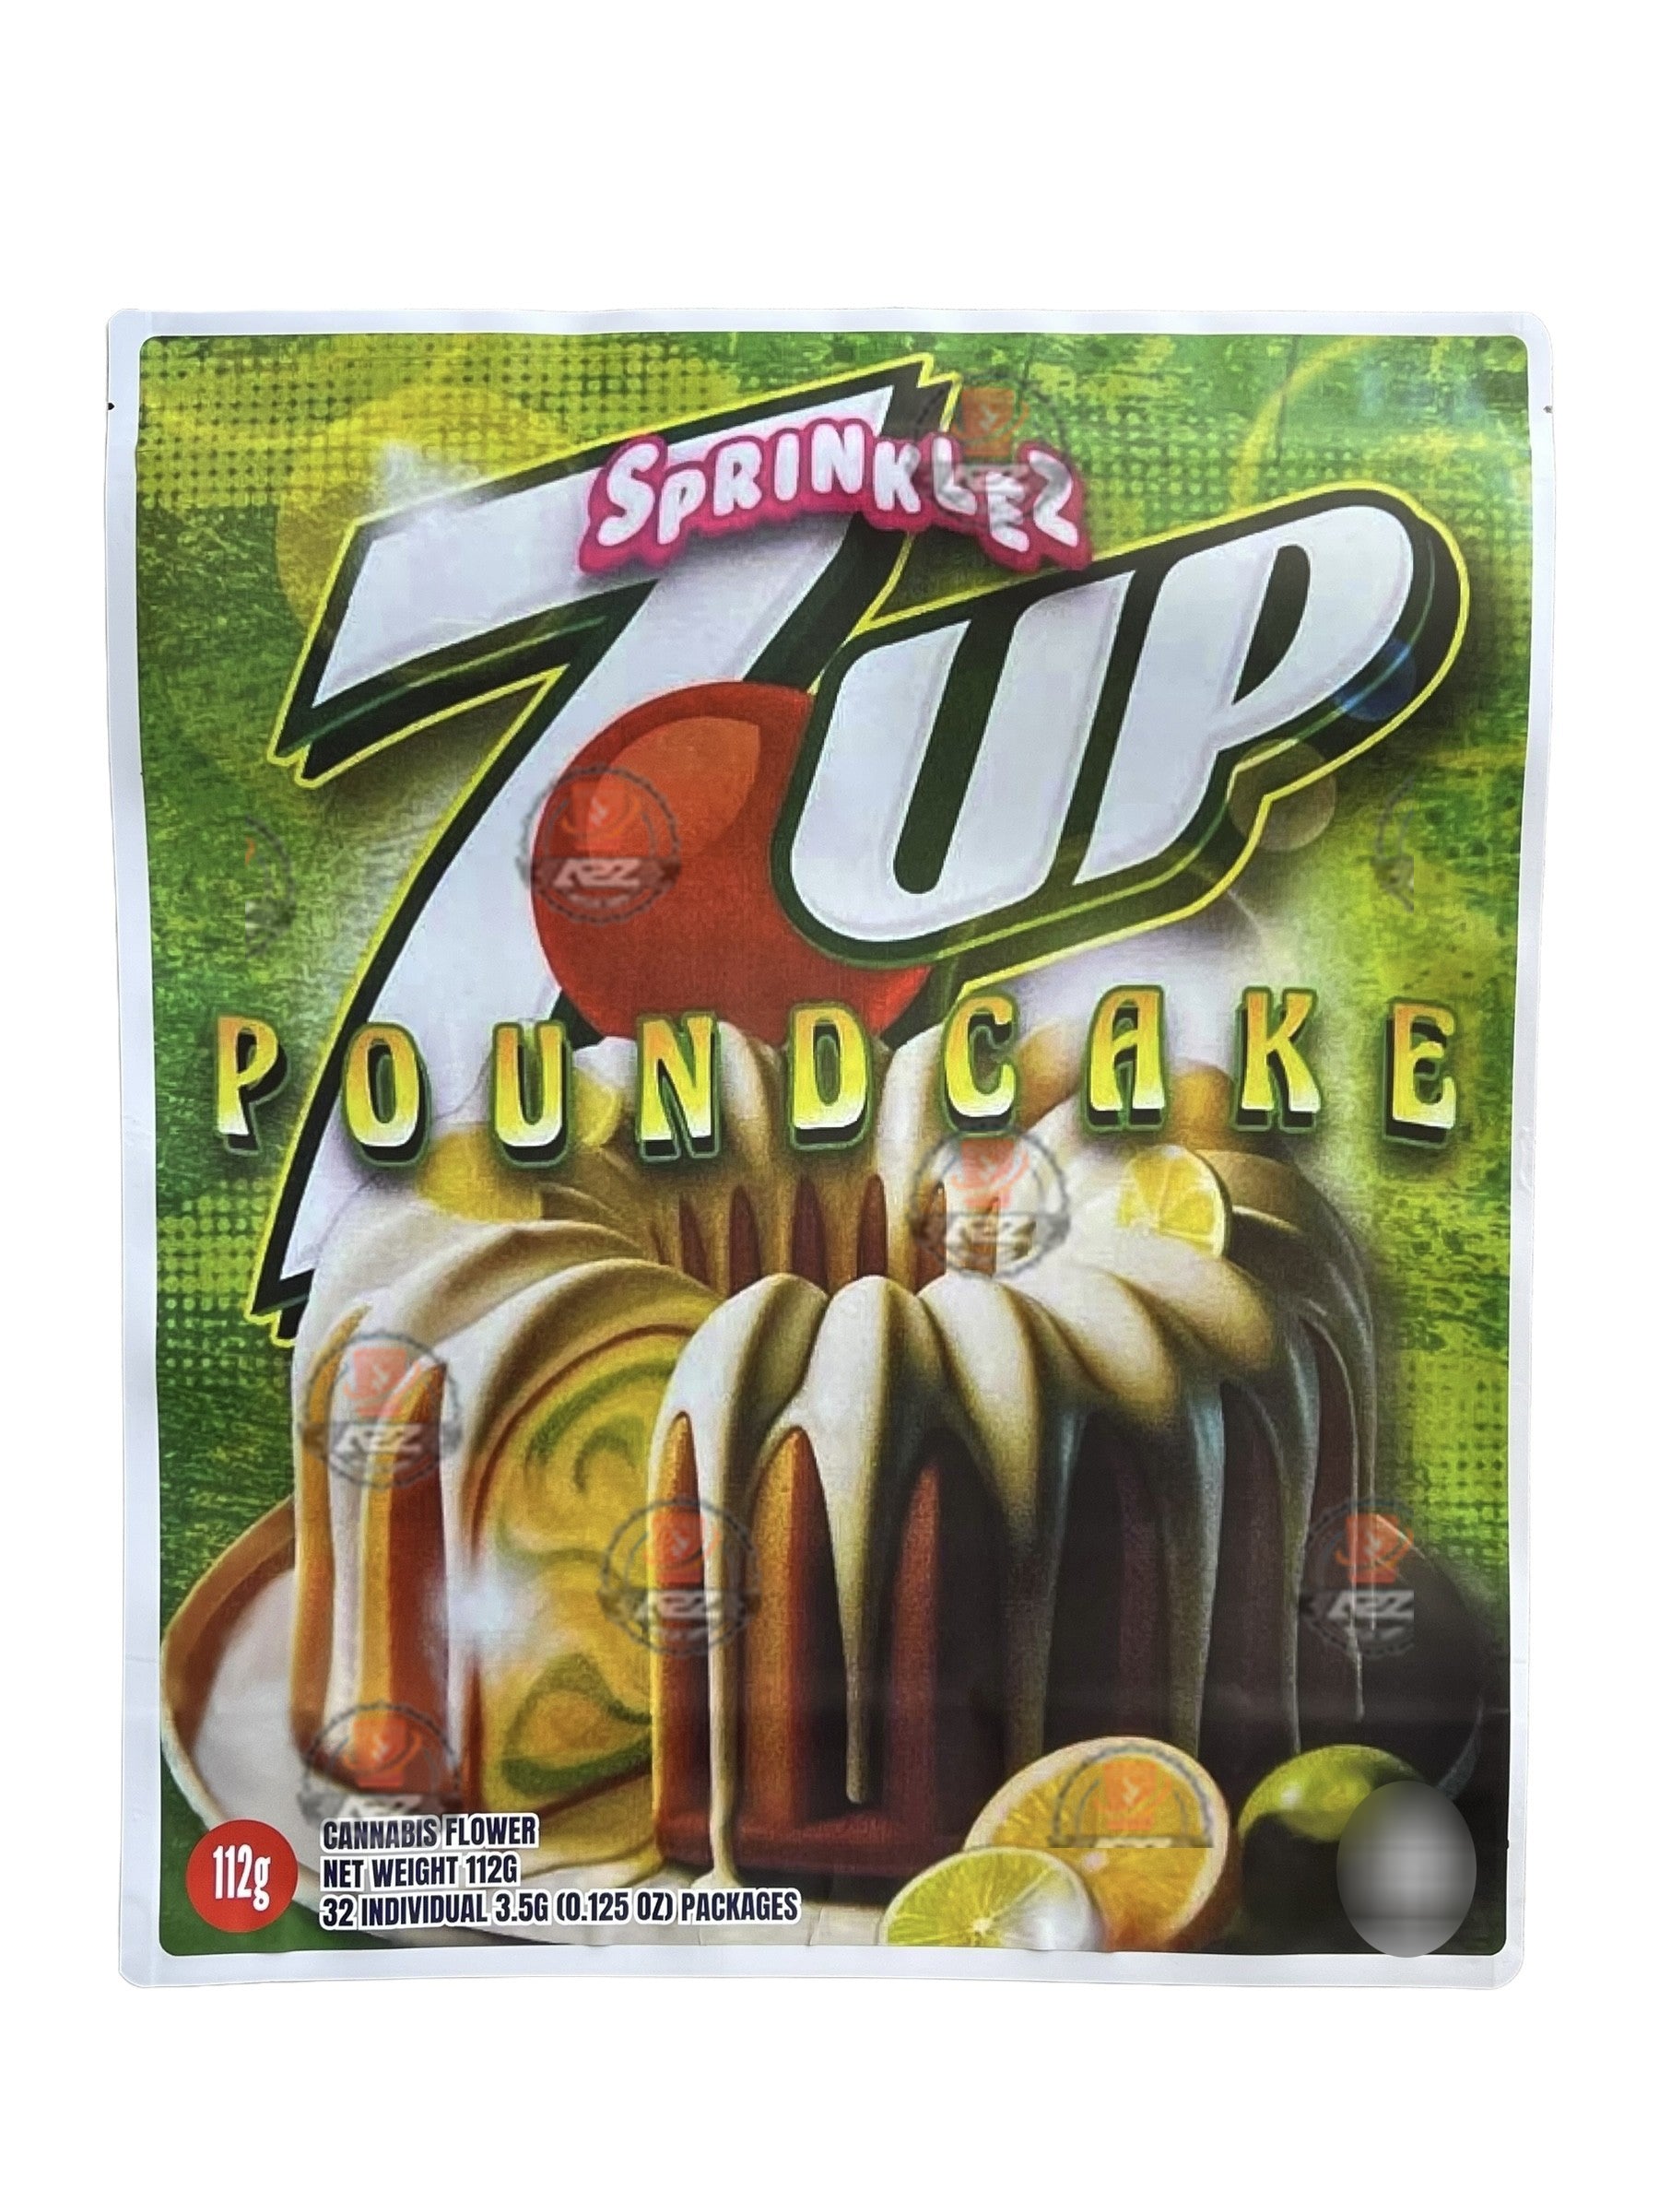 Sprinklez 7UP Pound Cake 1 Pound Mylar Bag Net Weight 112G Packaging Only